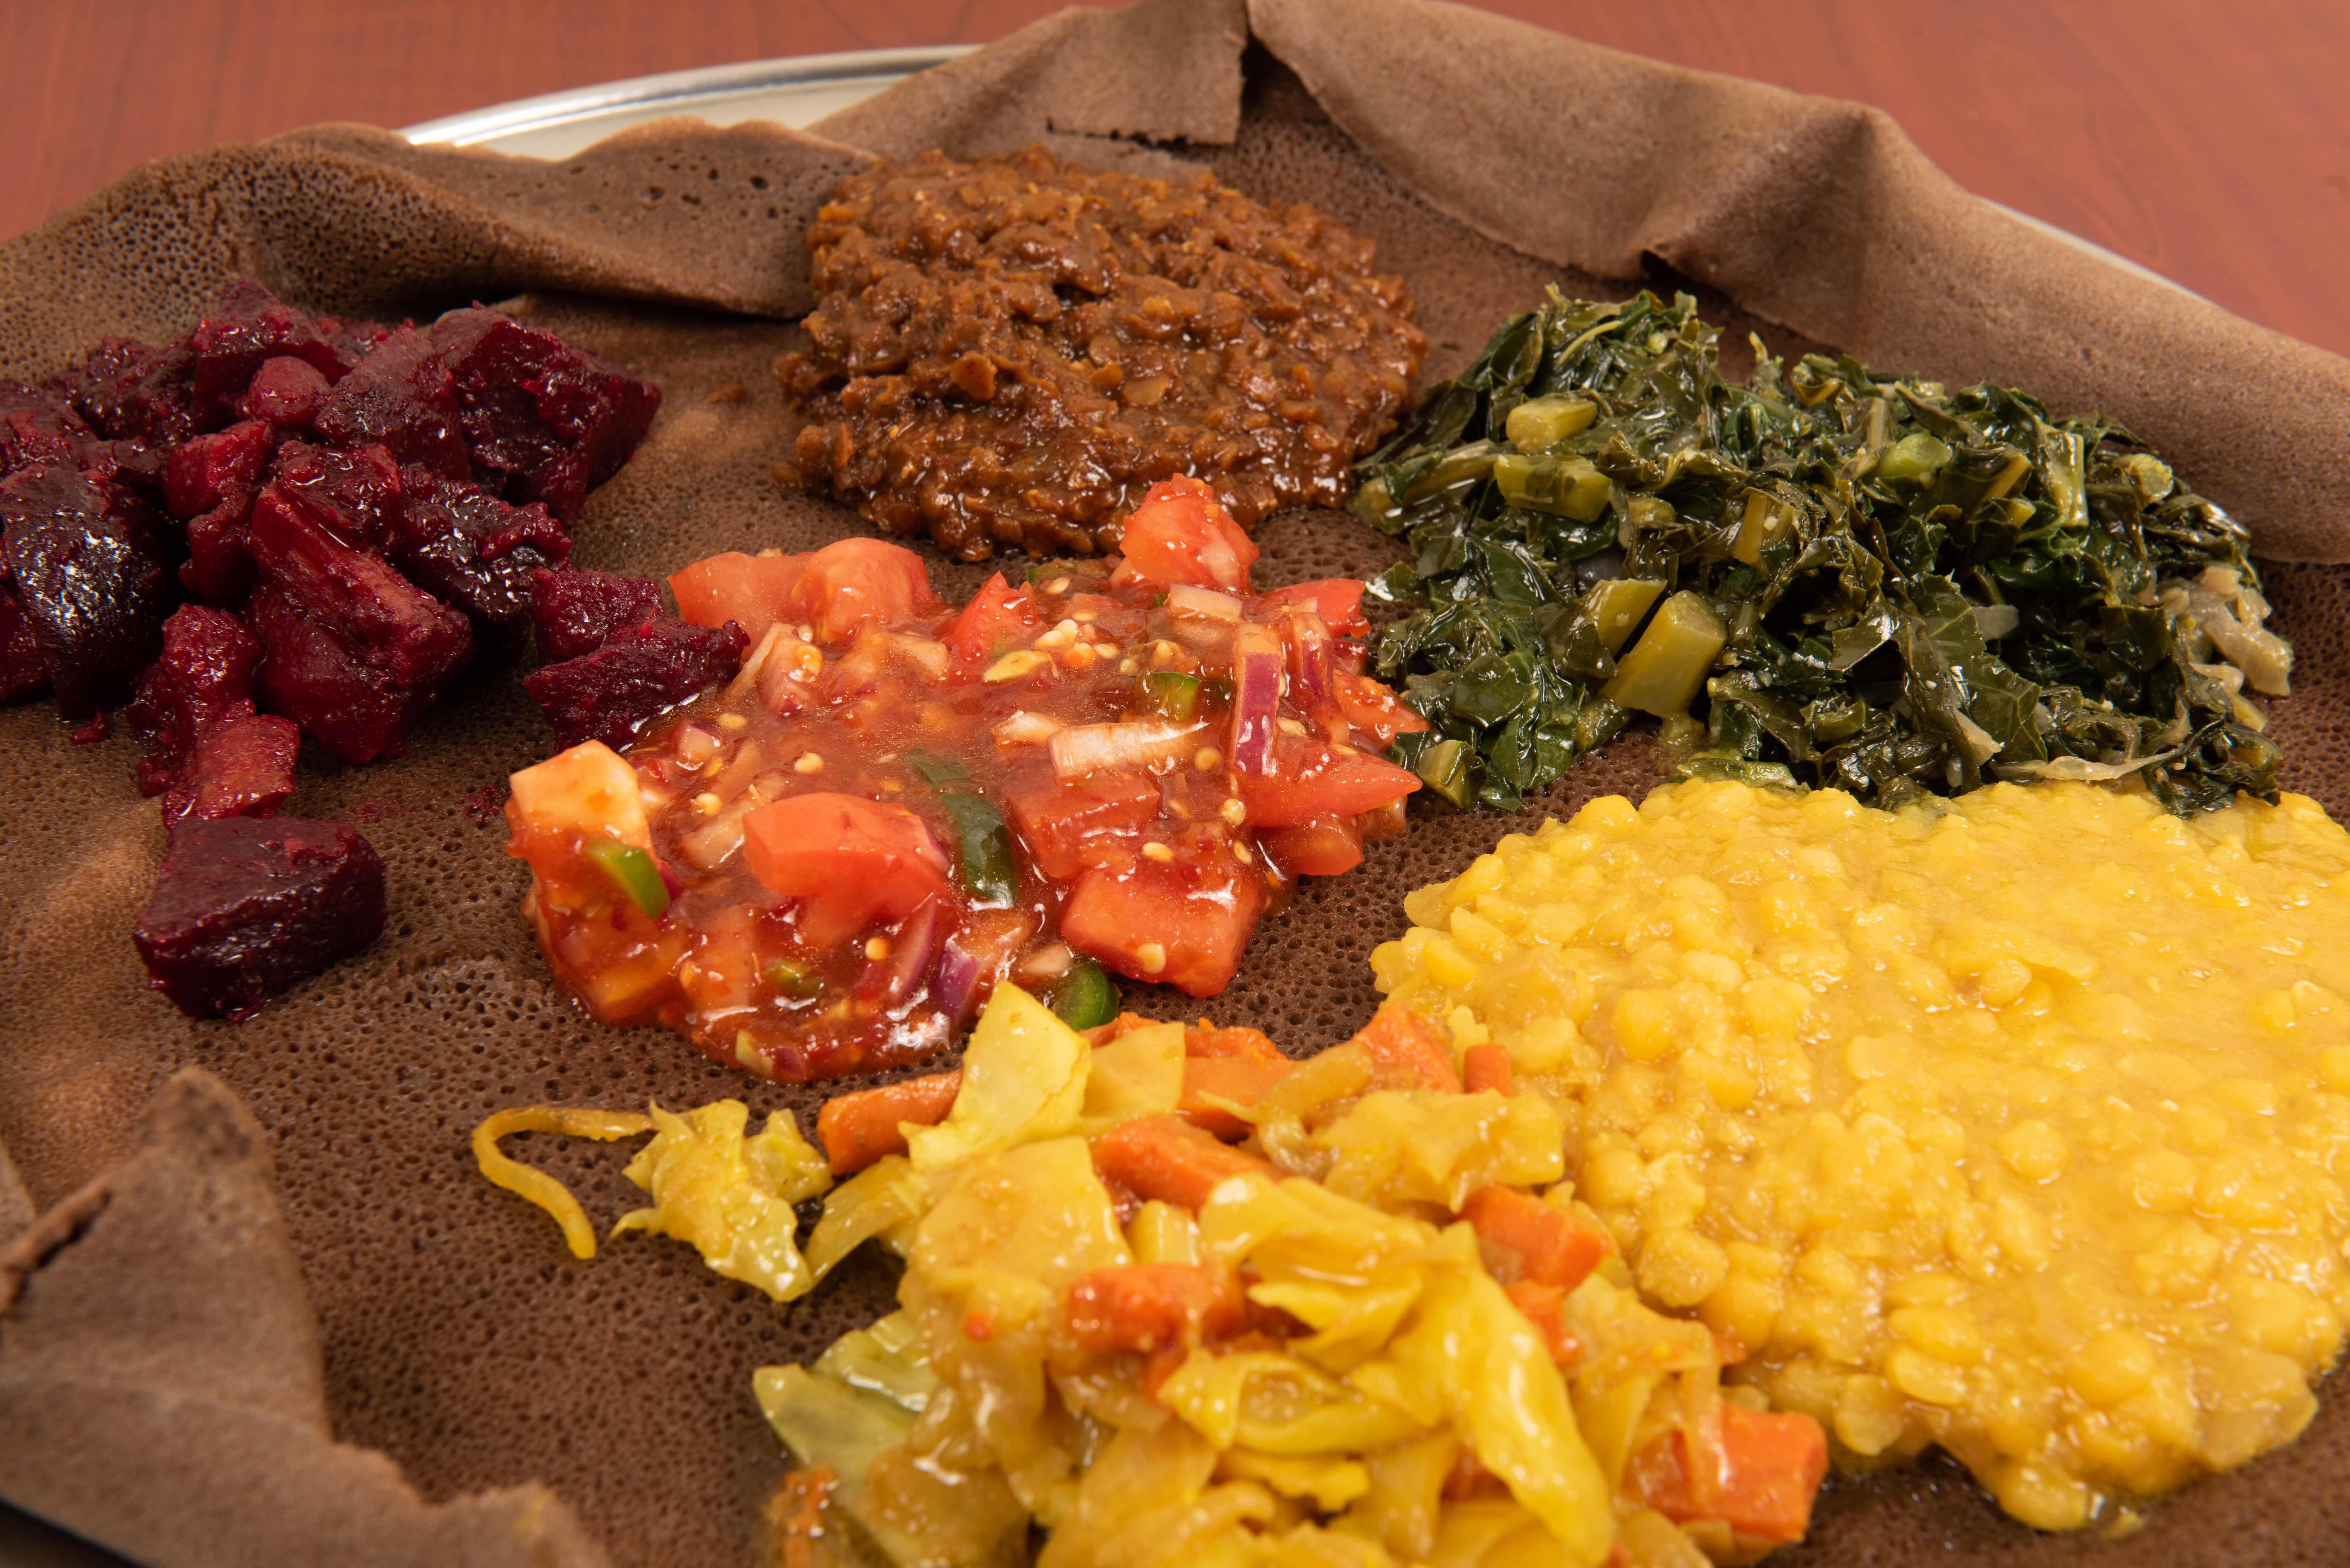 Rohobot Ethiopian Restaurant Photo